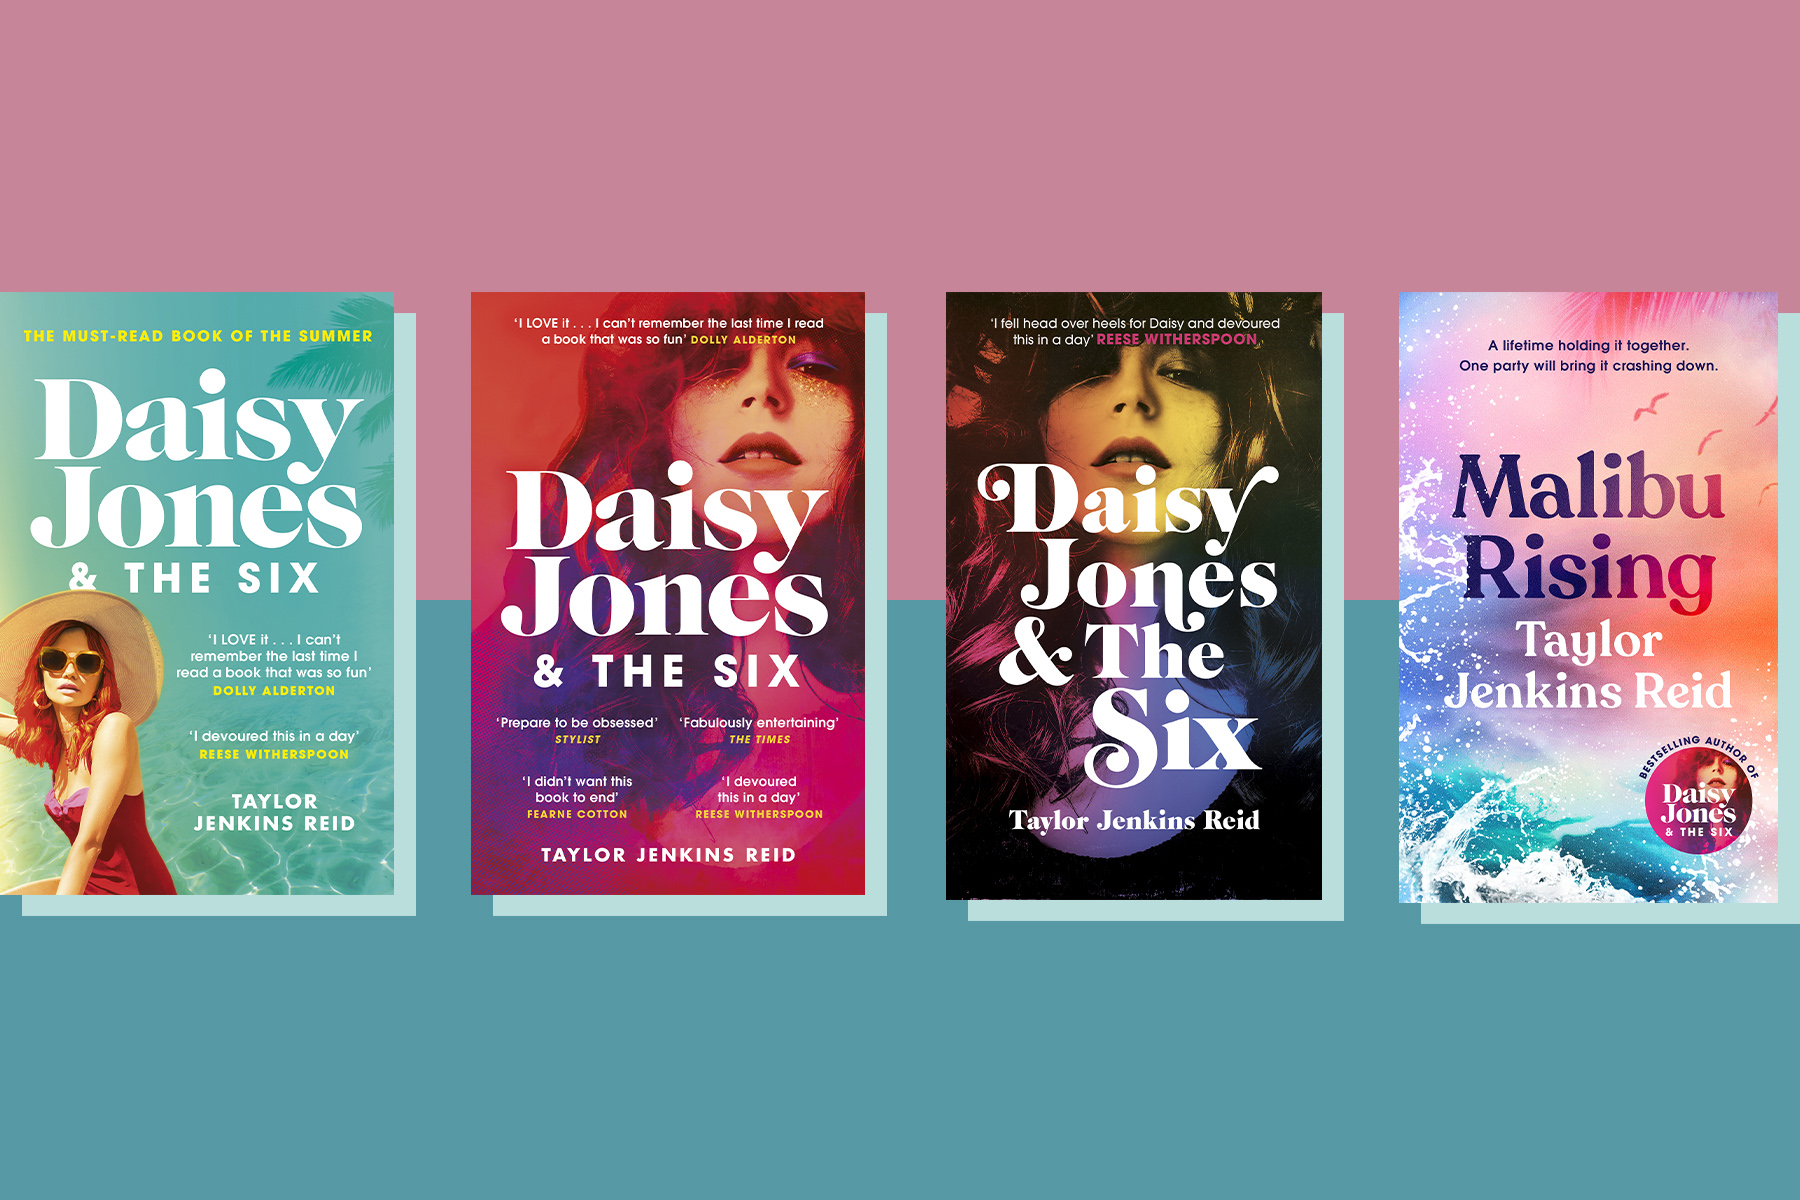 The three covers of Daisy Jones & the Six next to Malibu Rising